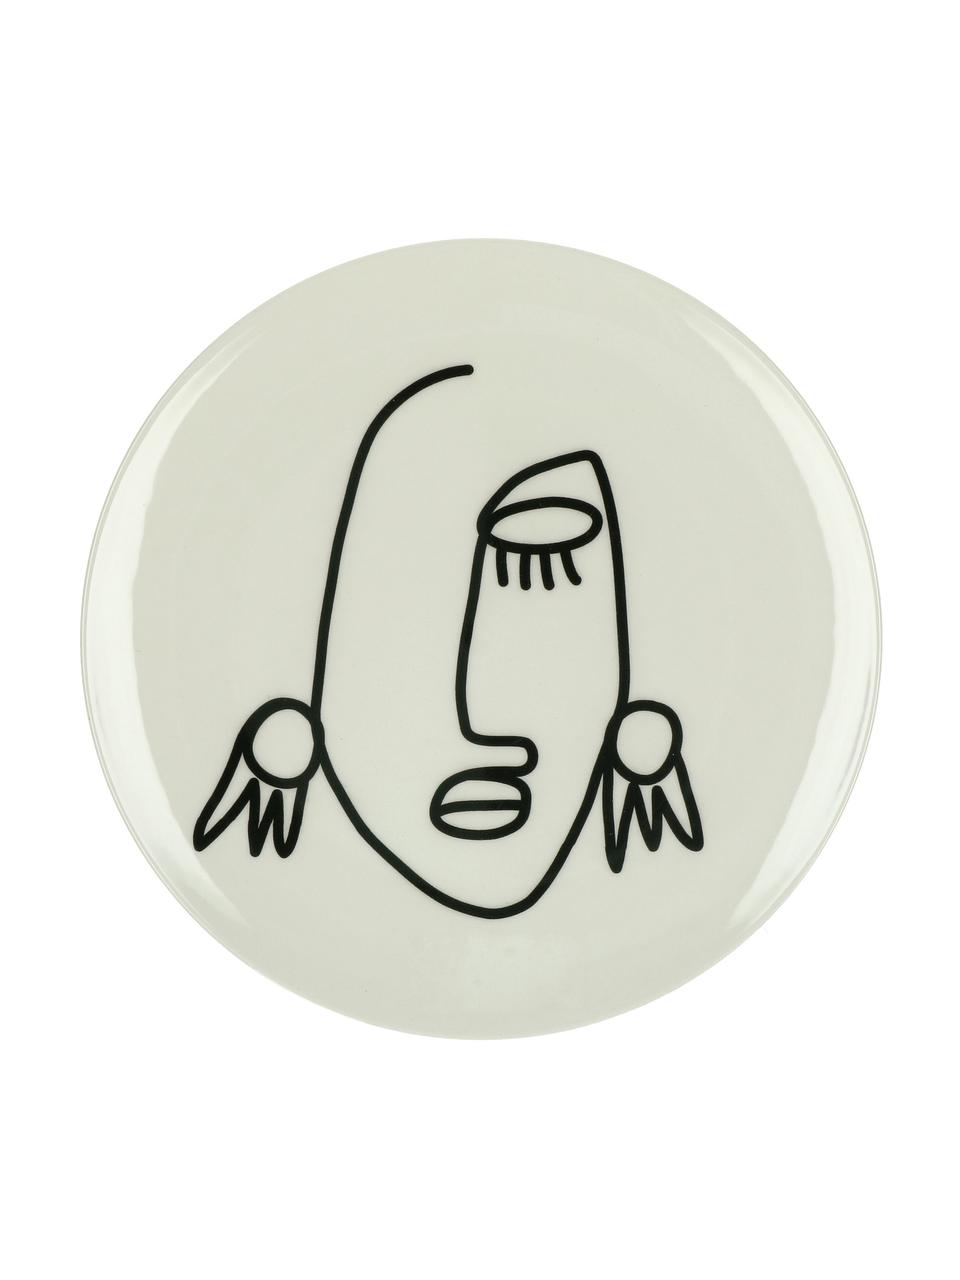 Platos postre Modiglia, 2 uds., Gres, Blanco crema, negro, Ø 23 cm